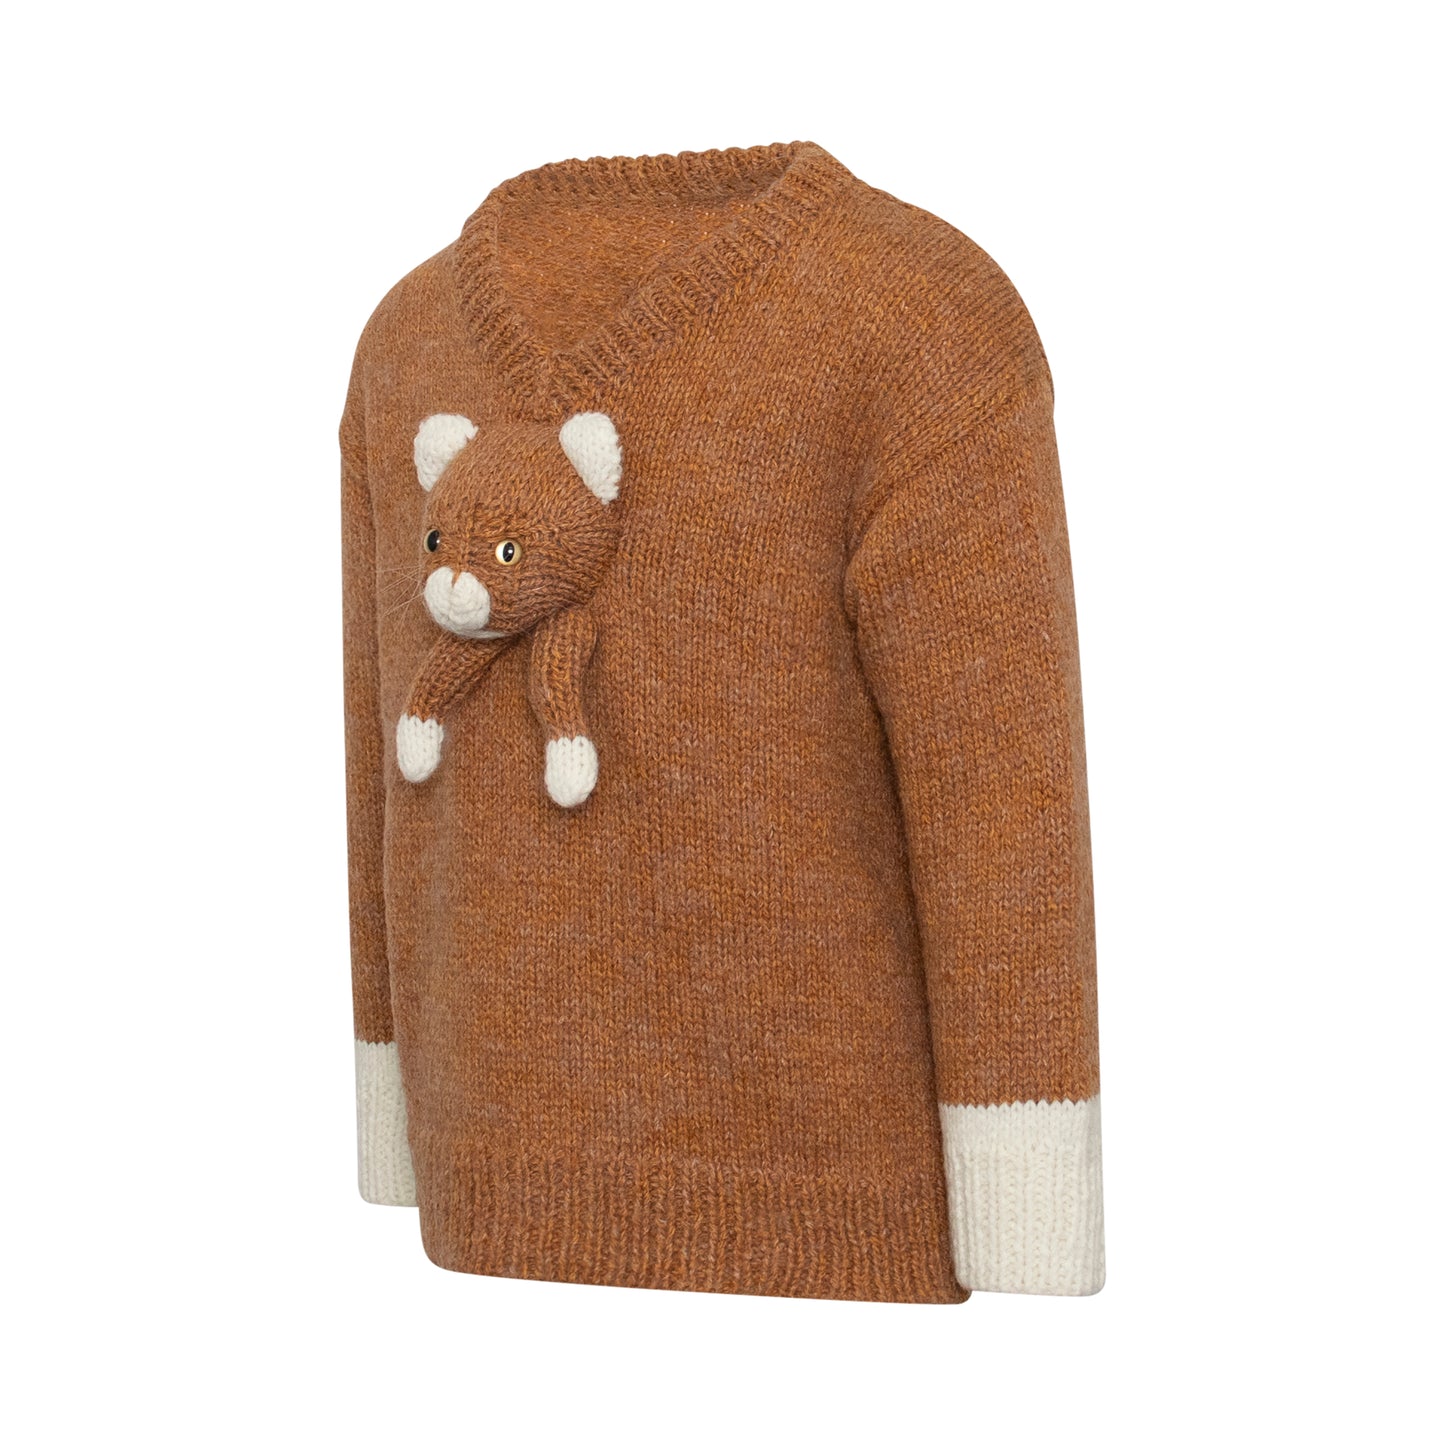 Stuffed Cat Hand-Knitting Sweater in Camel